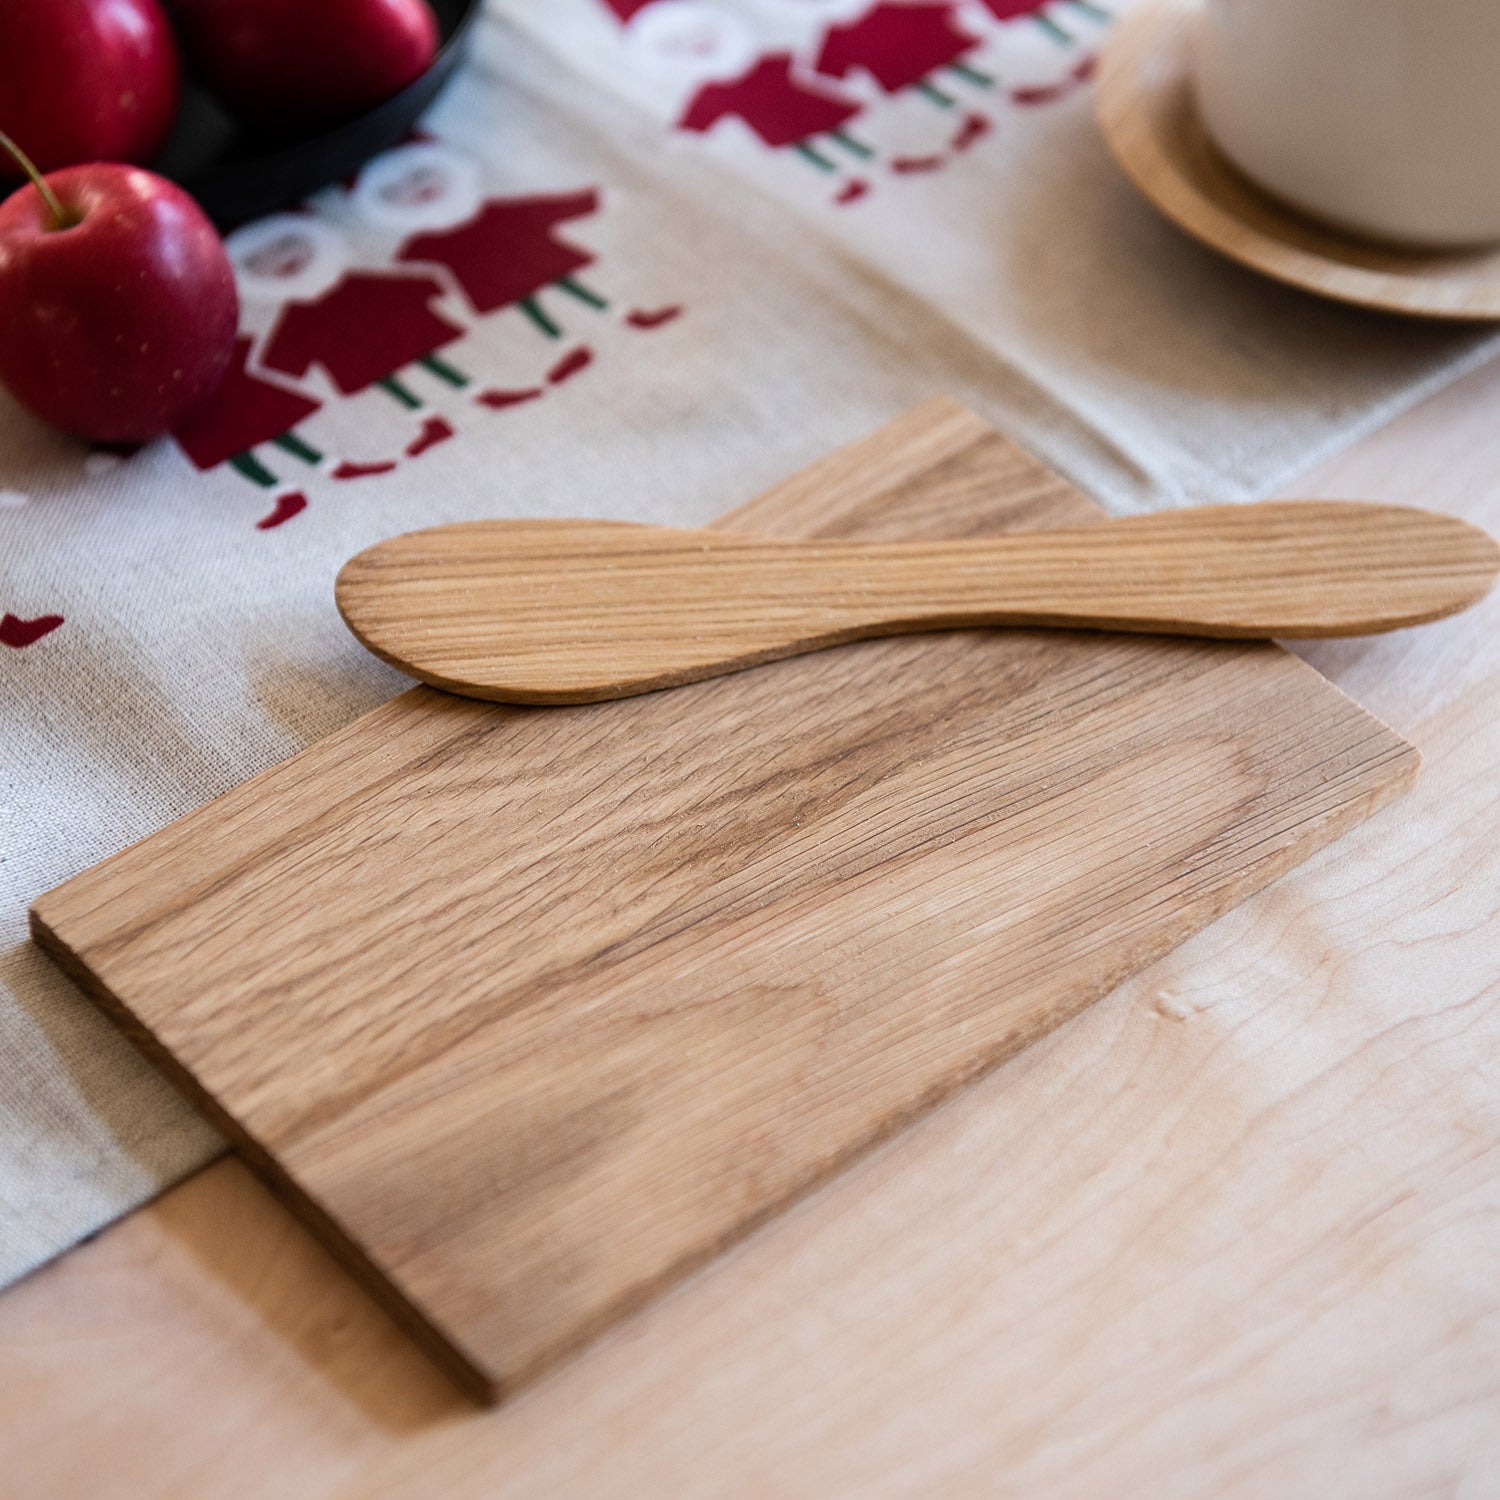 Wood Plate & Butter Knife set2